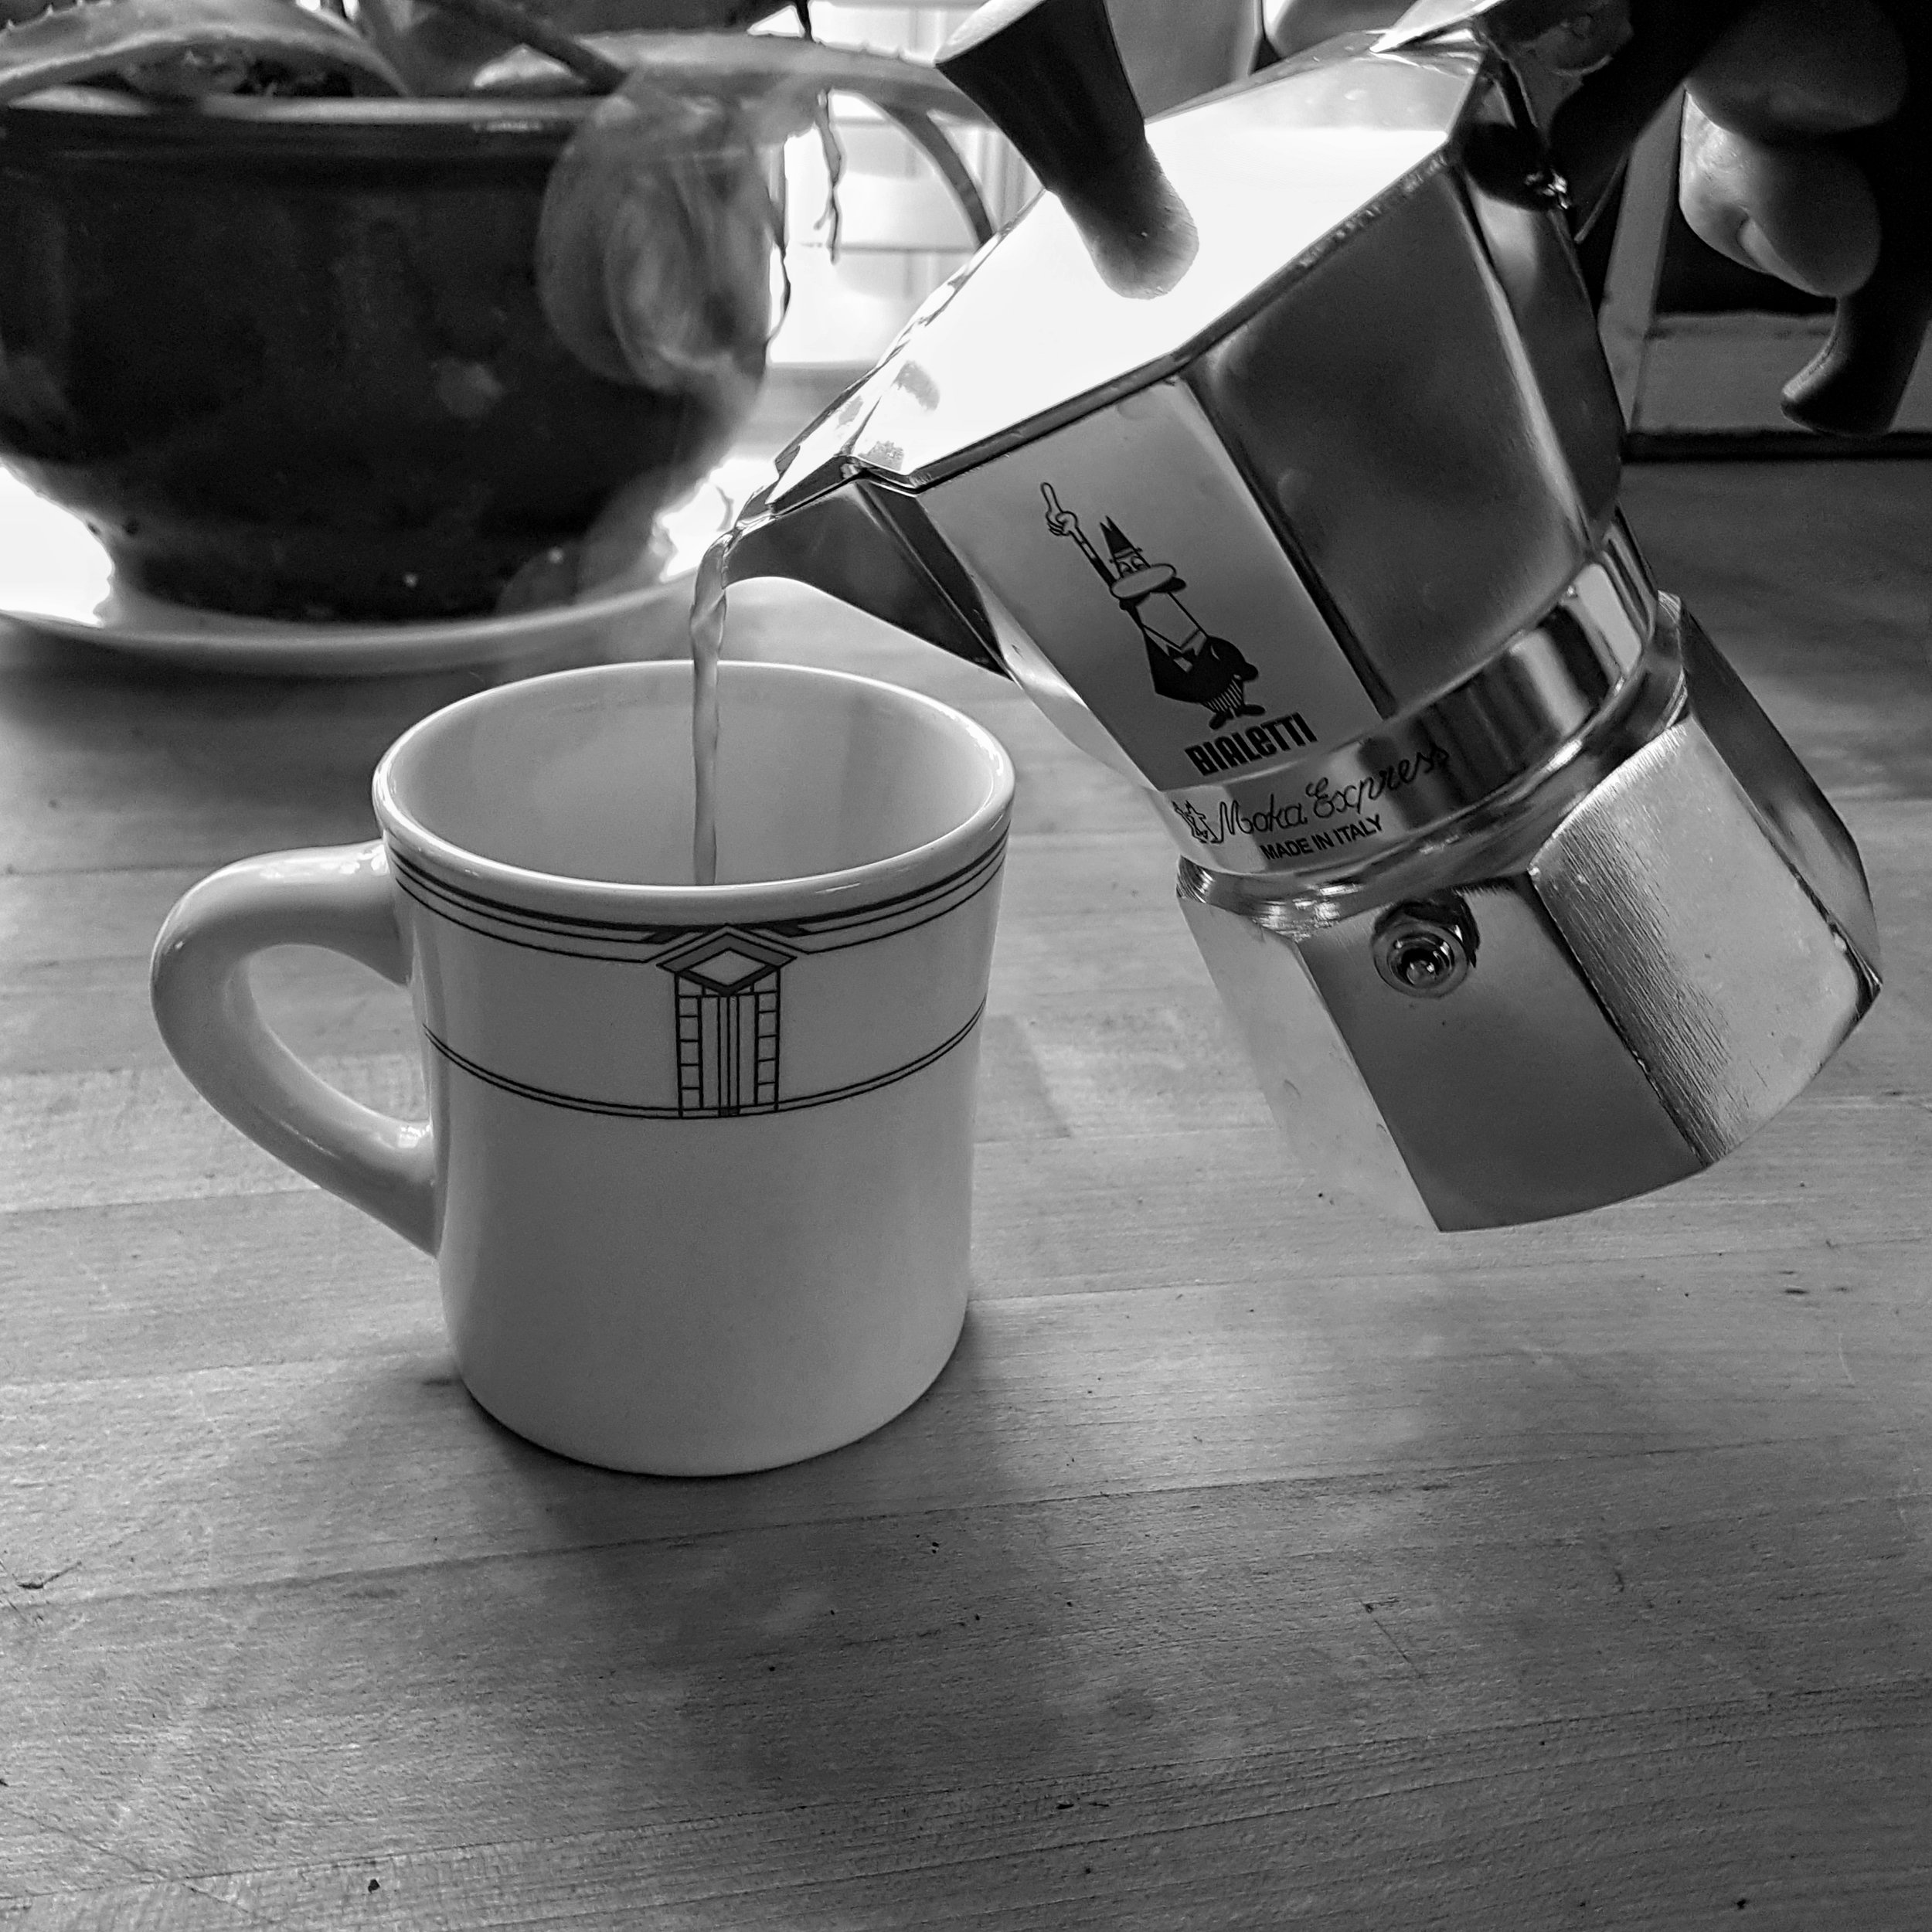 A Moka Pot pouring coffee into a cup on a table